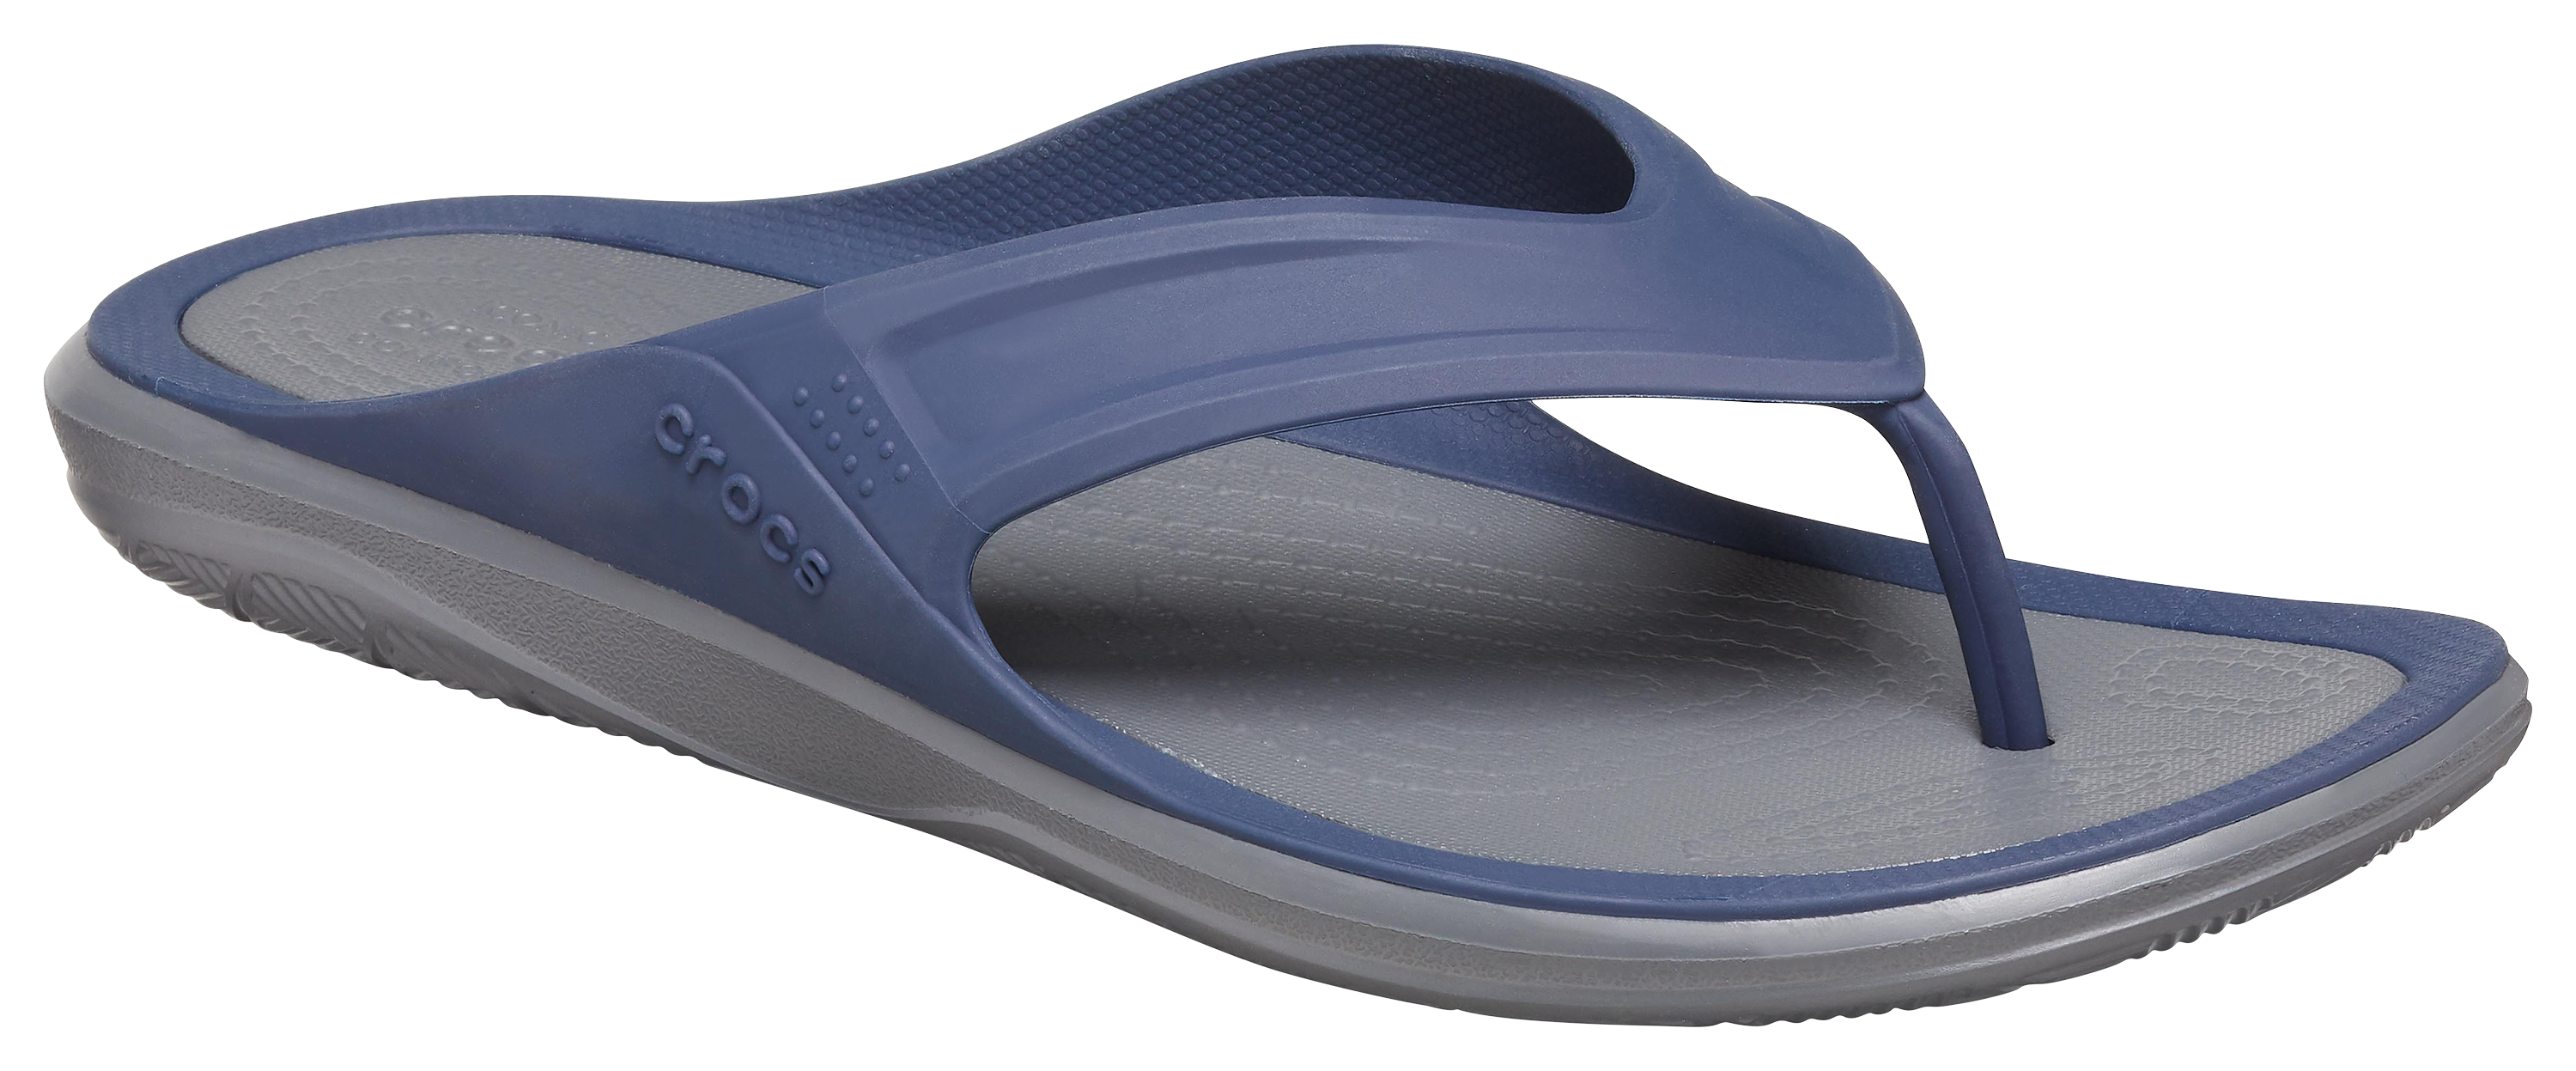 Crocs Swiftwater Wave Flip Thong Sandals for Men - Navy/Slate Grey - 13M